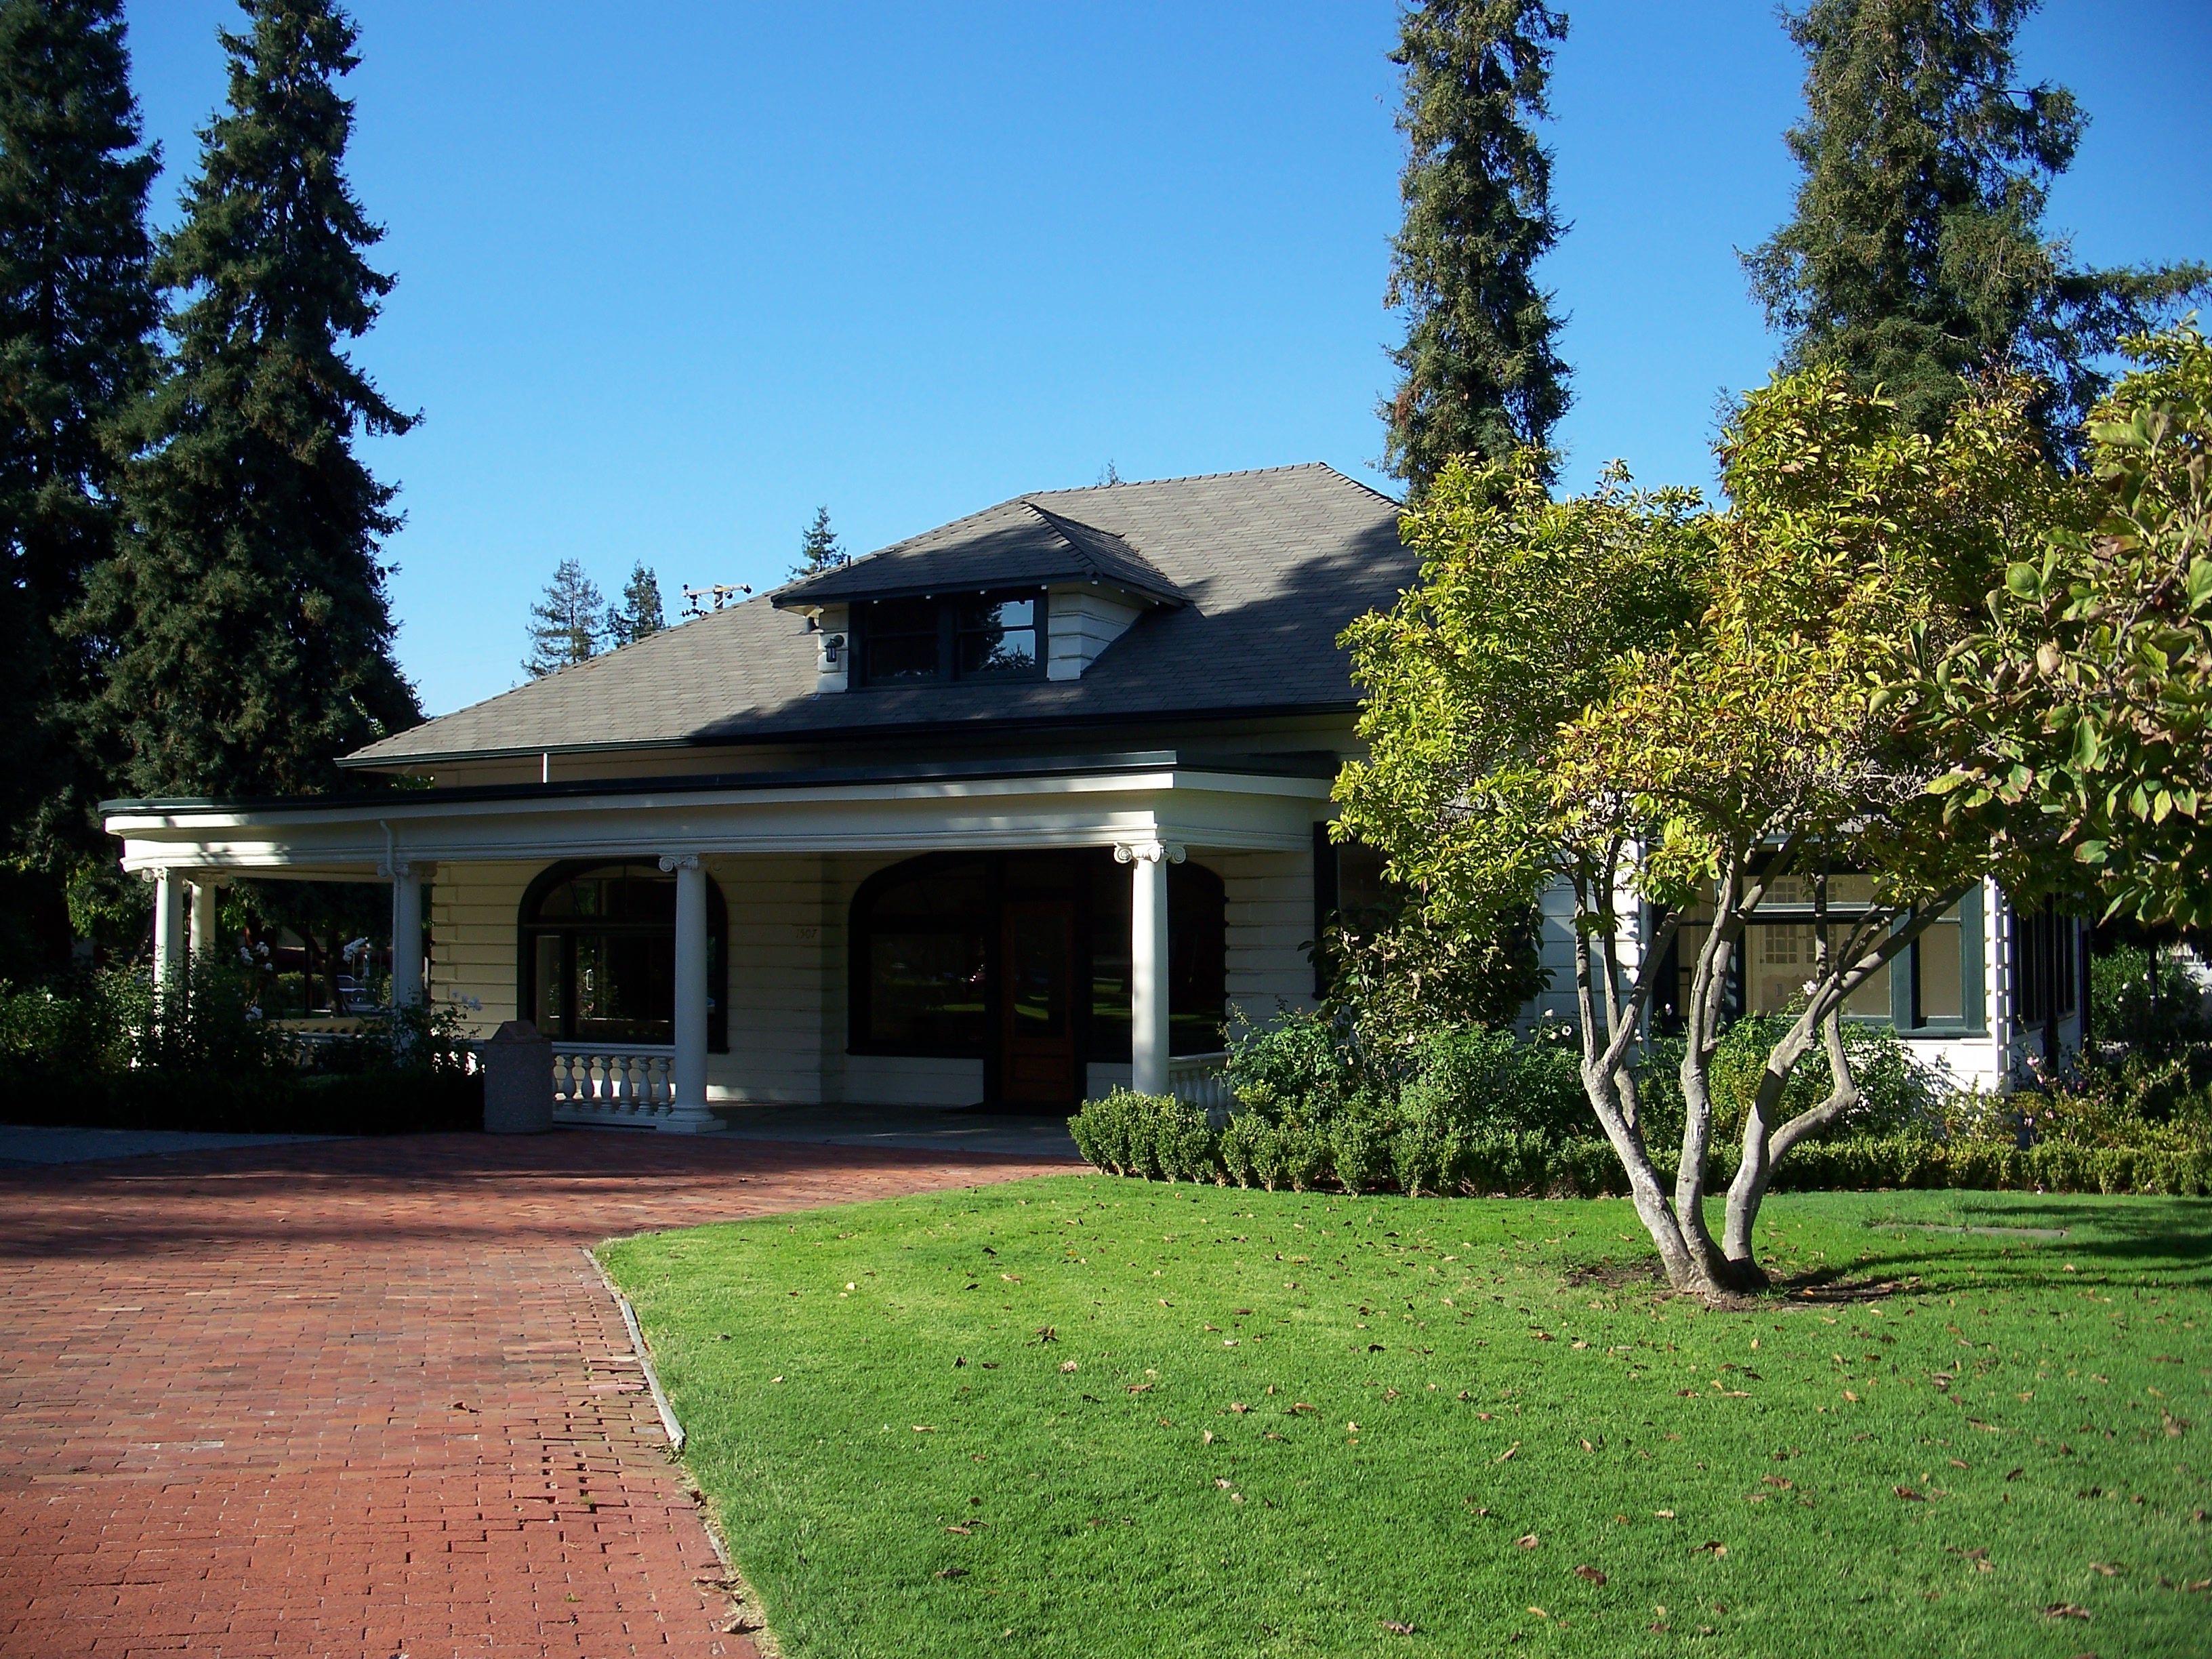 File:USA-Santa Clara-Jamison-Brown House-2.jpg - Wikimedia Commons